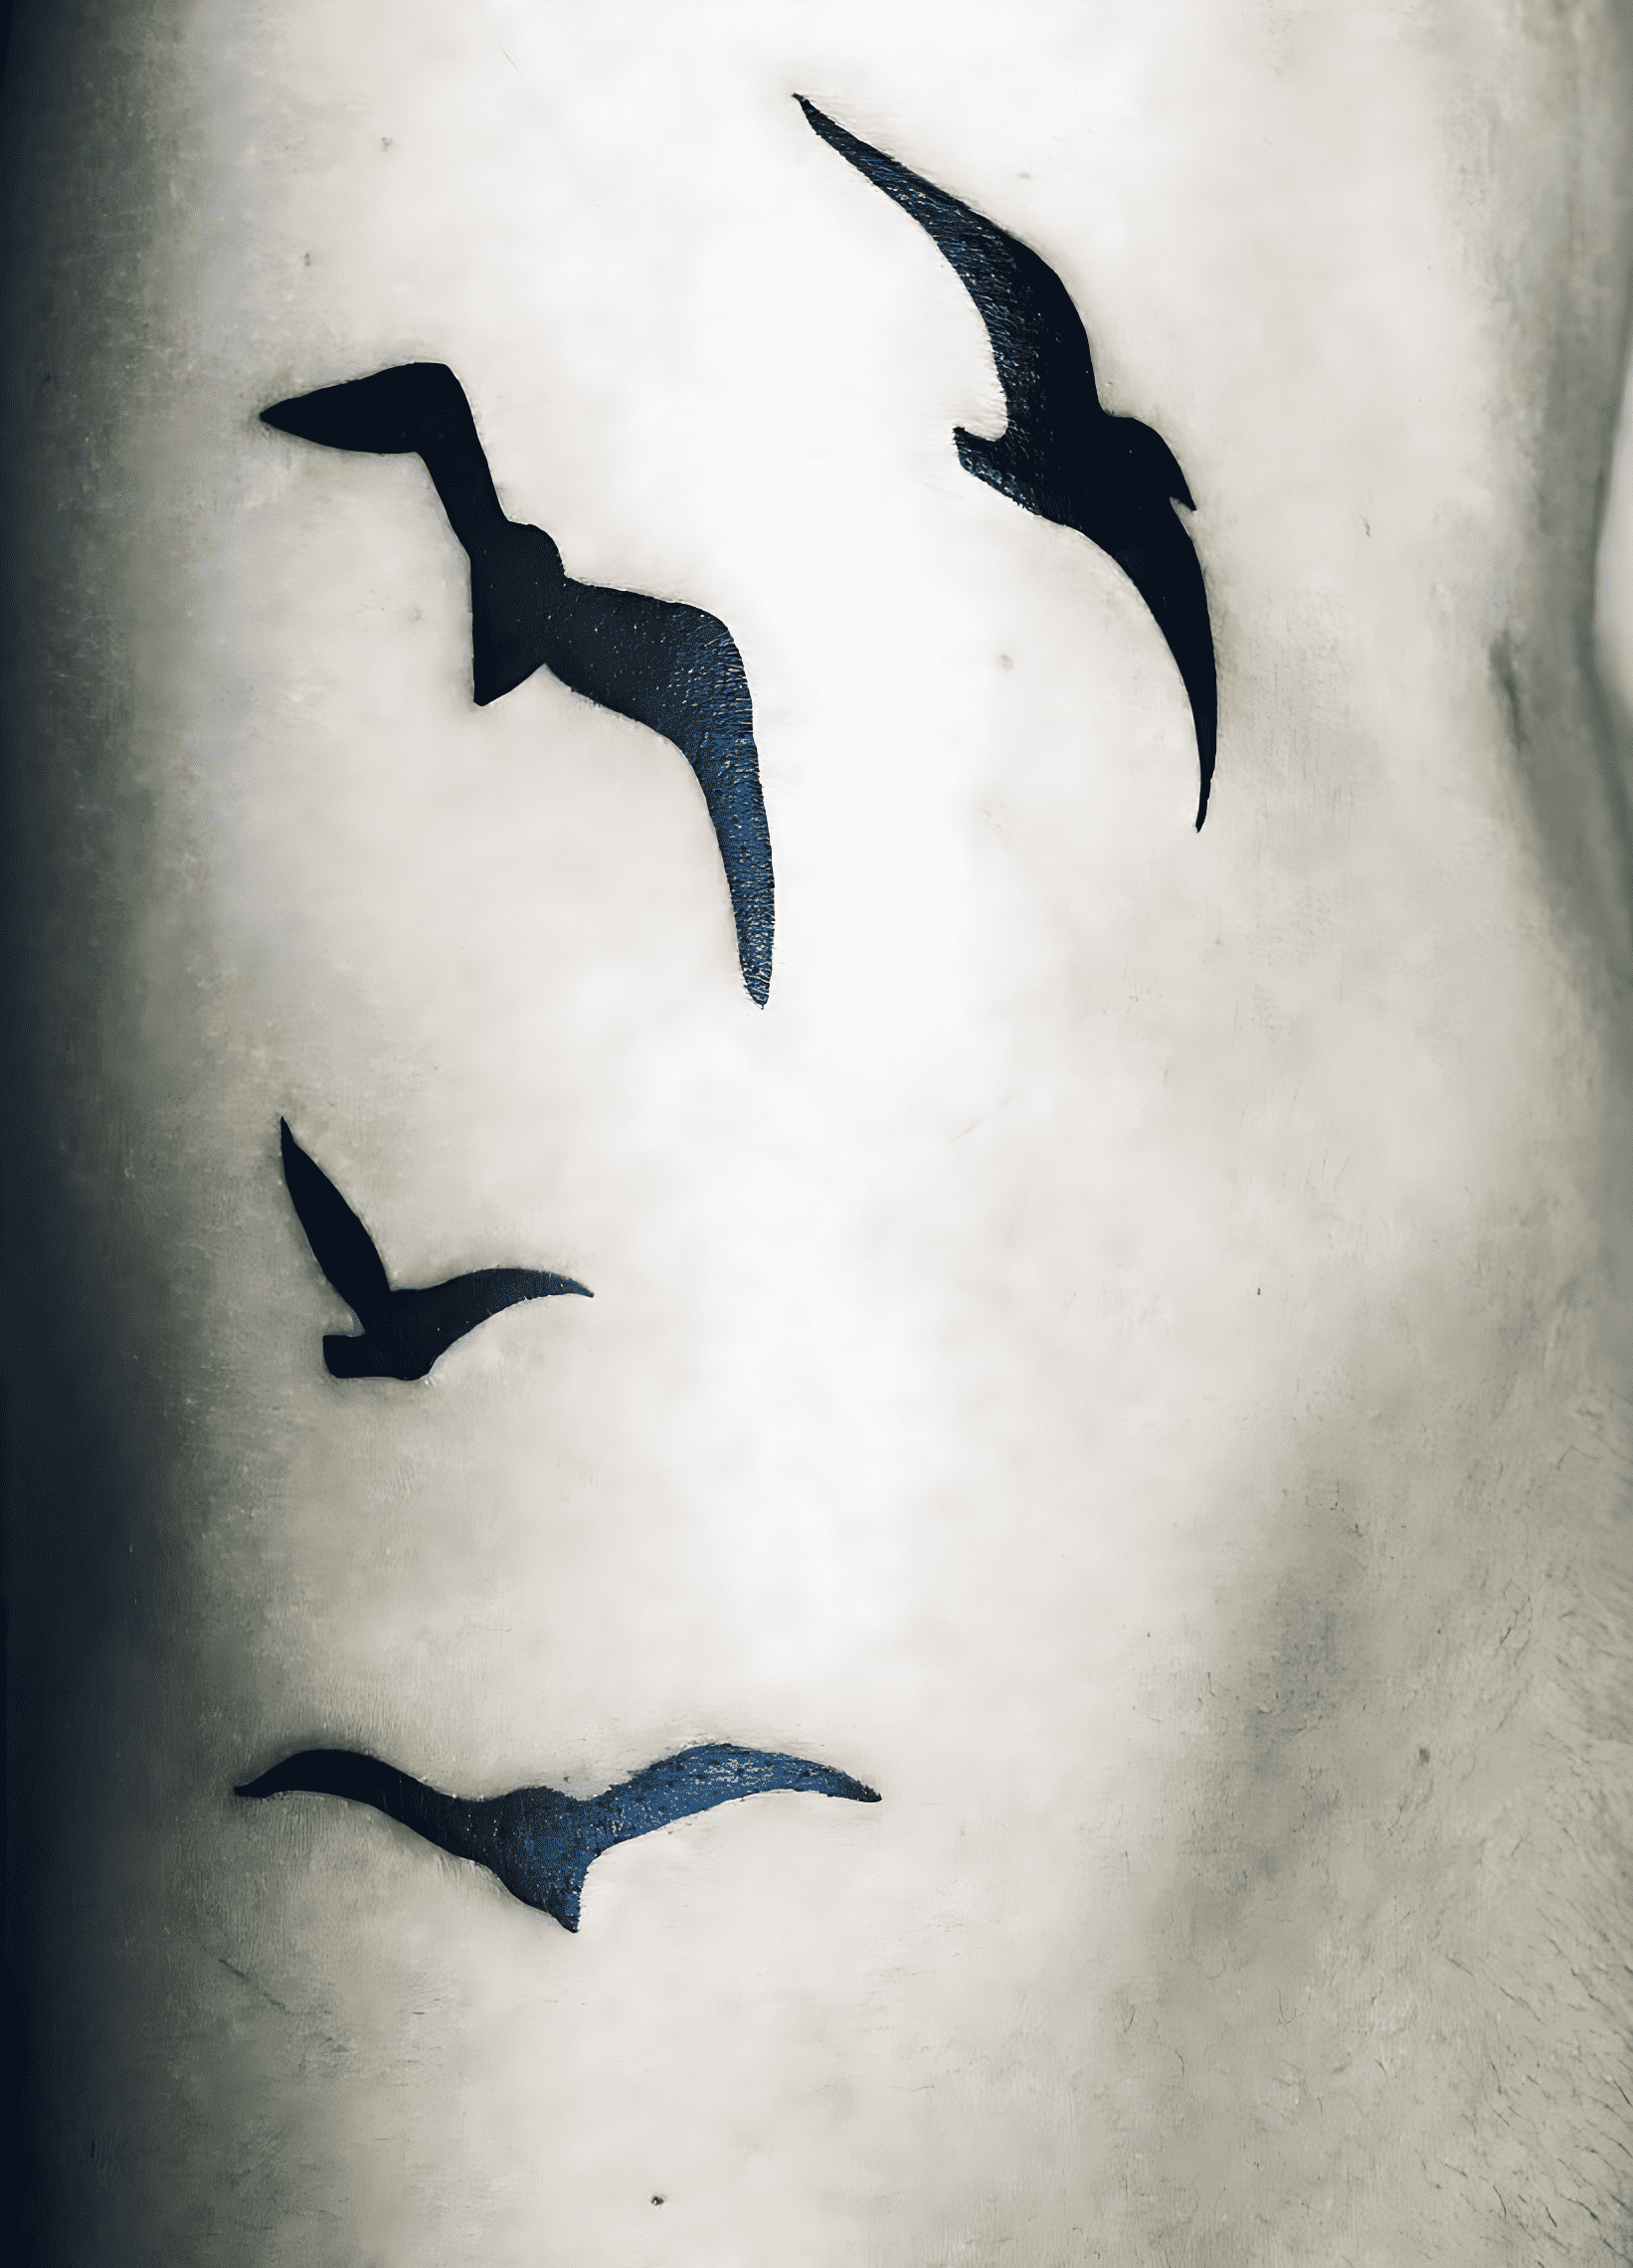 Bird Flying Tattoo Photos